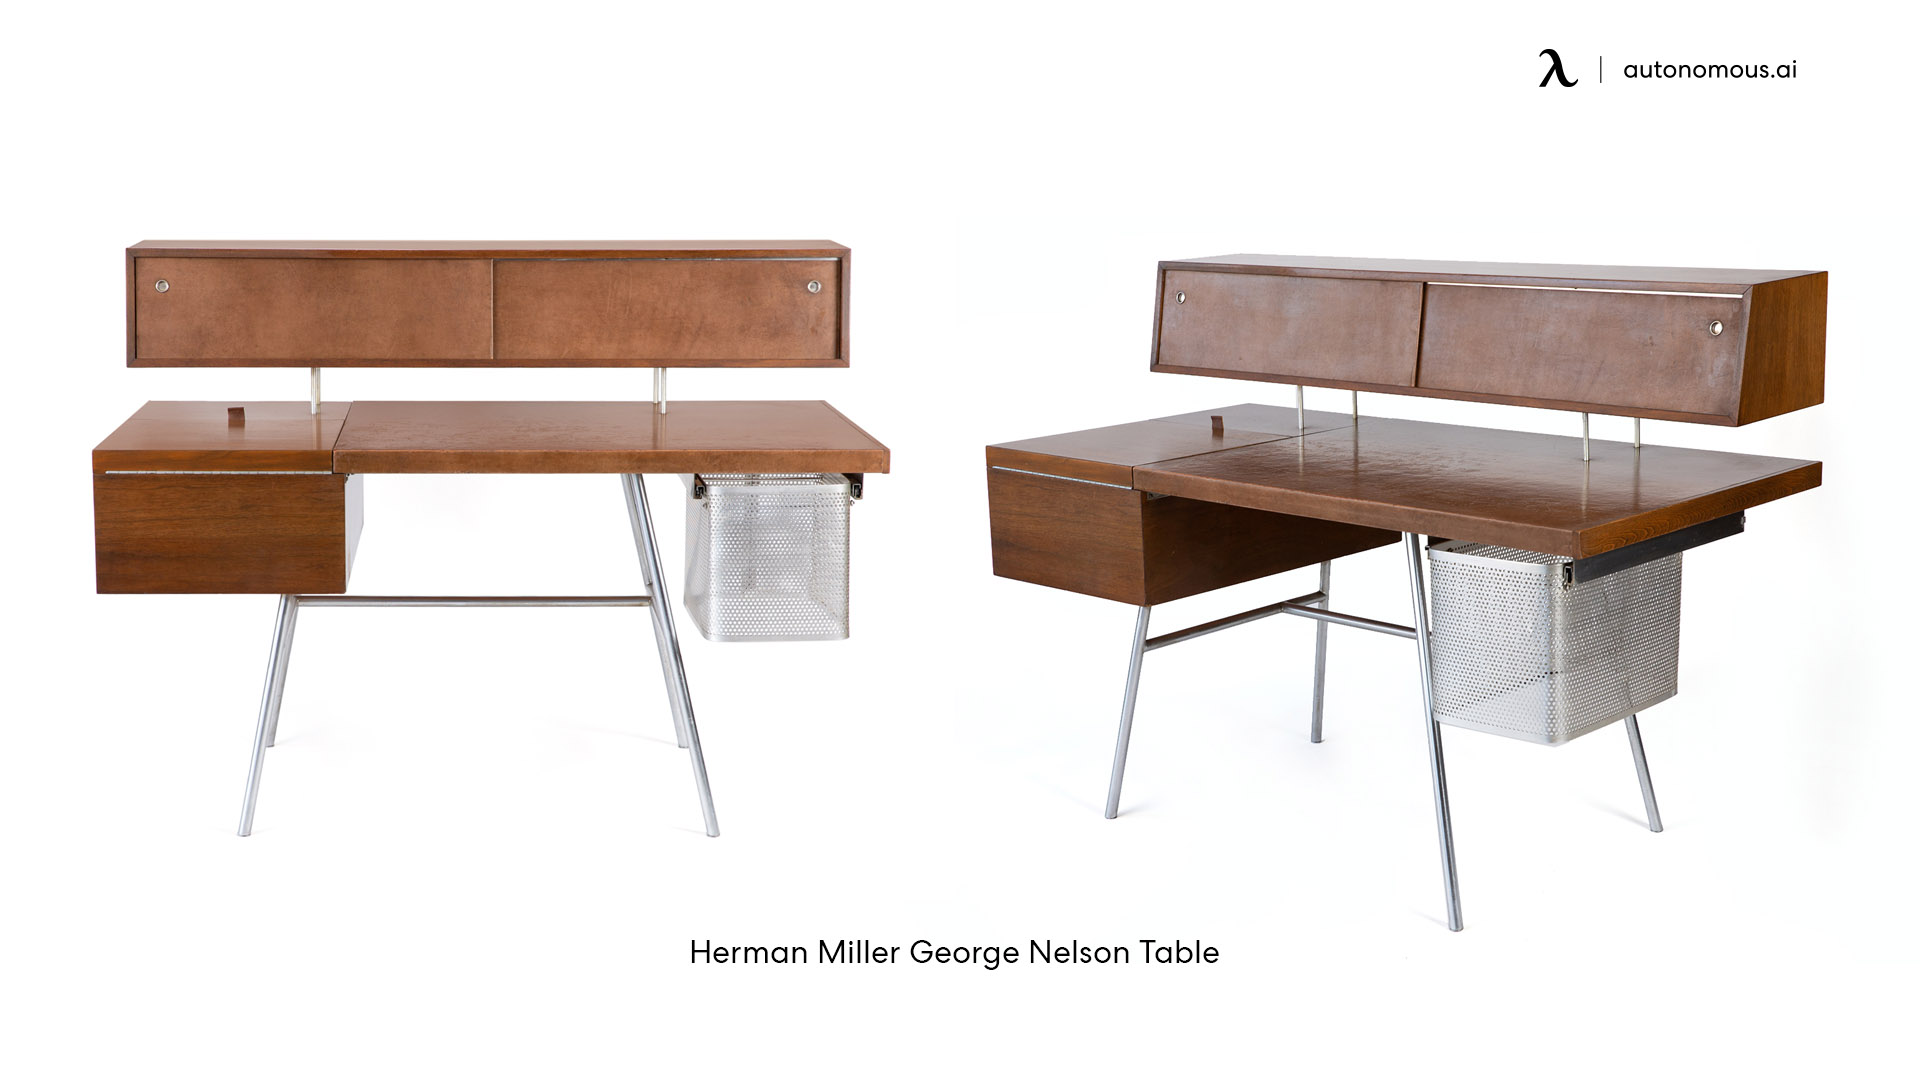 Herman Miller George Nelson Table